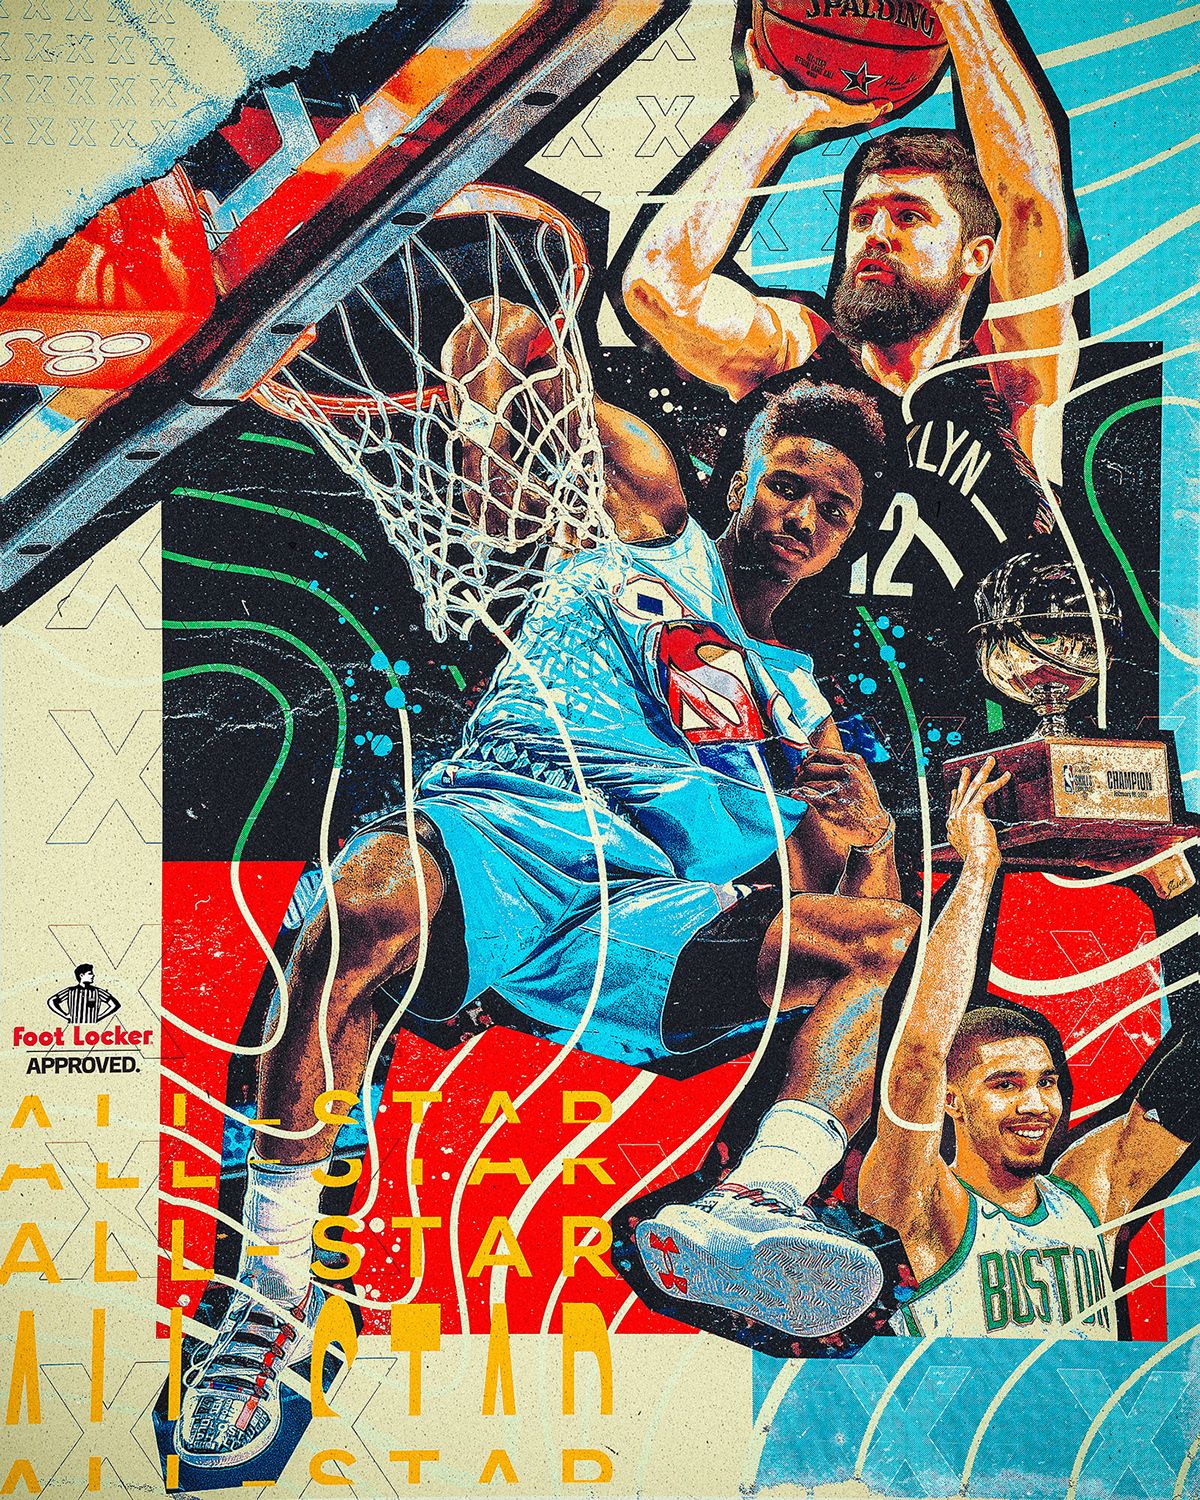 Foot Locker 2019 NBA All Star Illustrations. Sports Graphic Design, Star Illustration, Digital Illustration